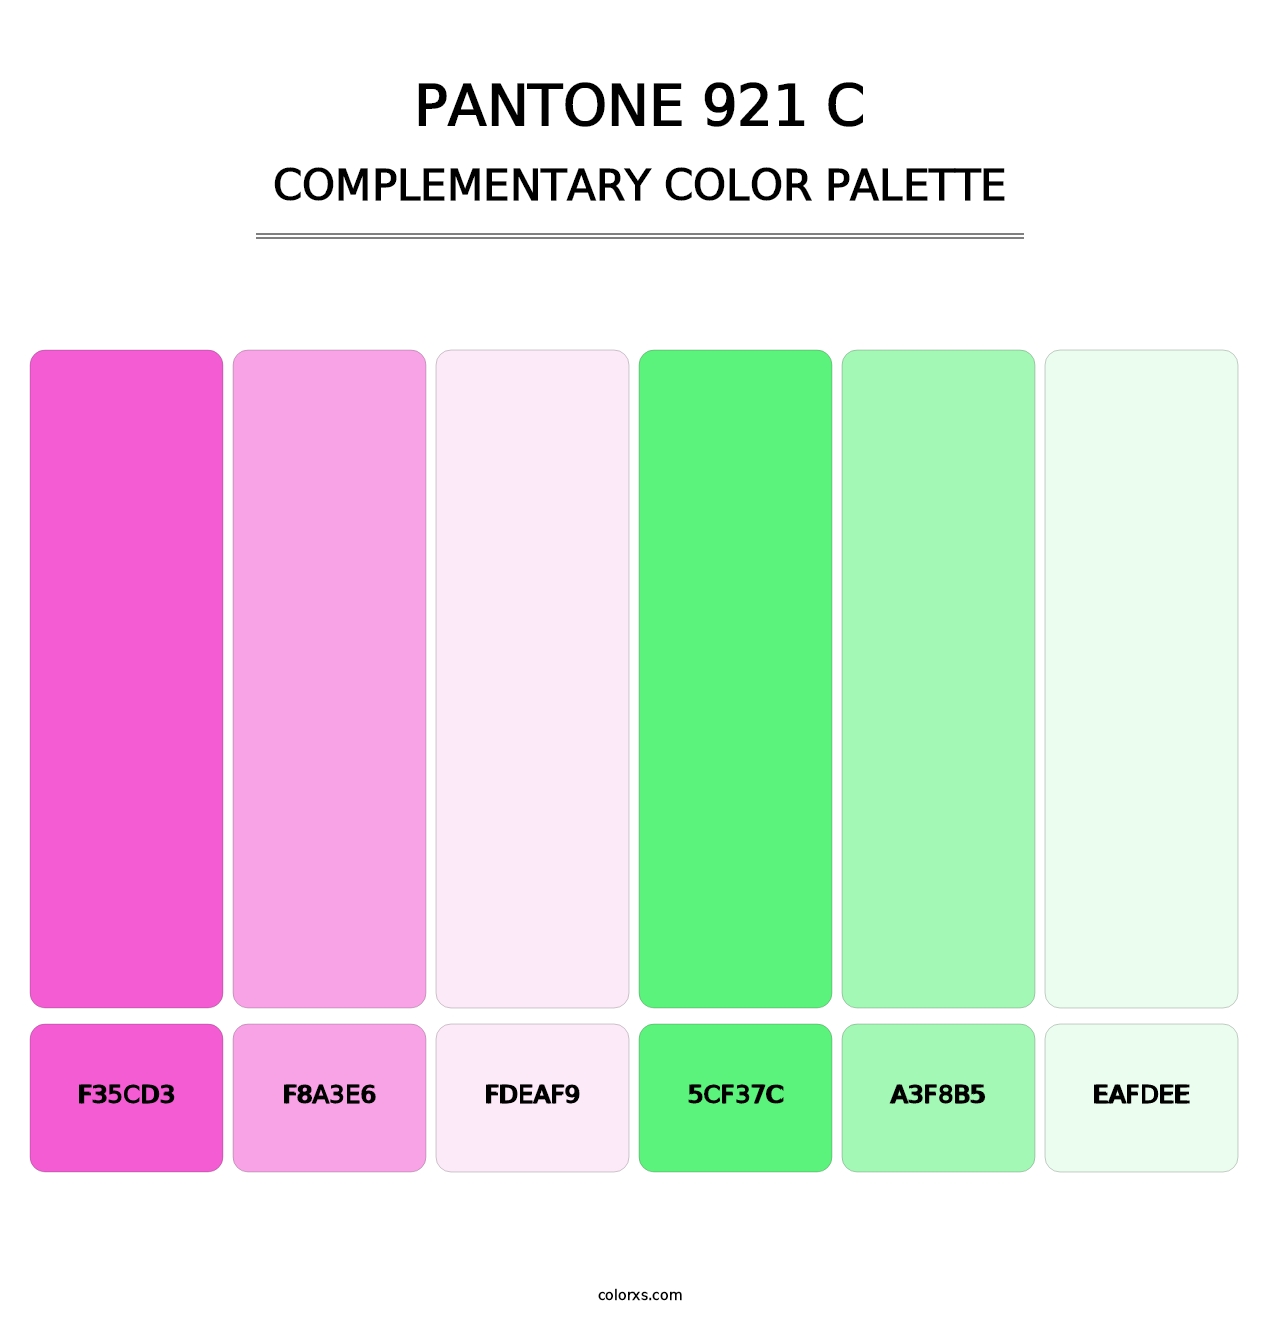 PANTONE 921 C - Complementary Color Palette